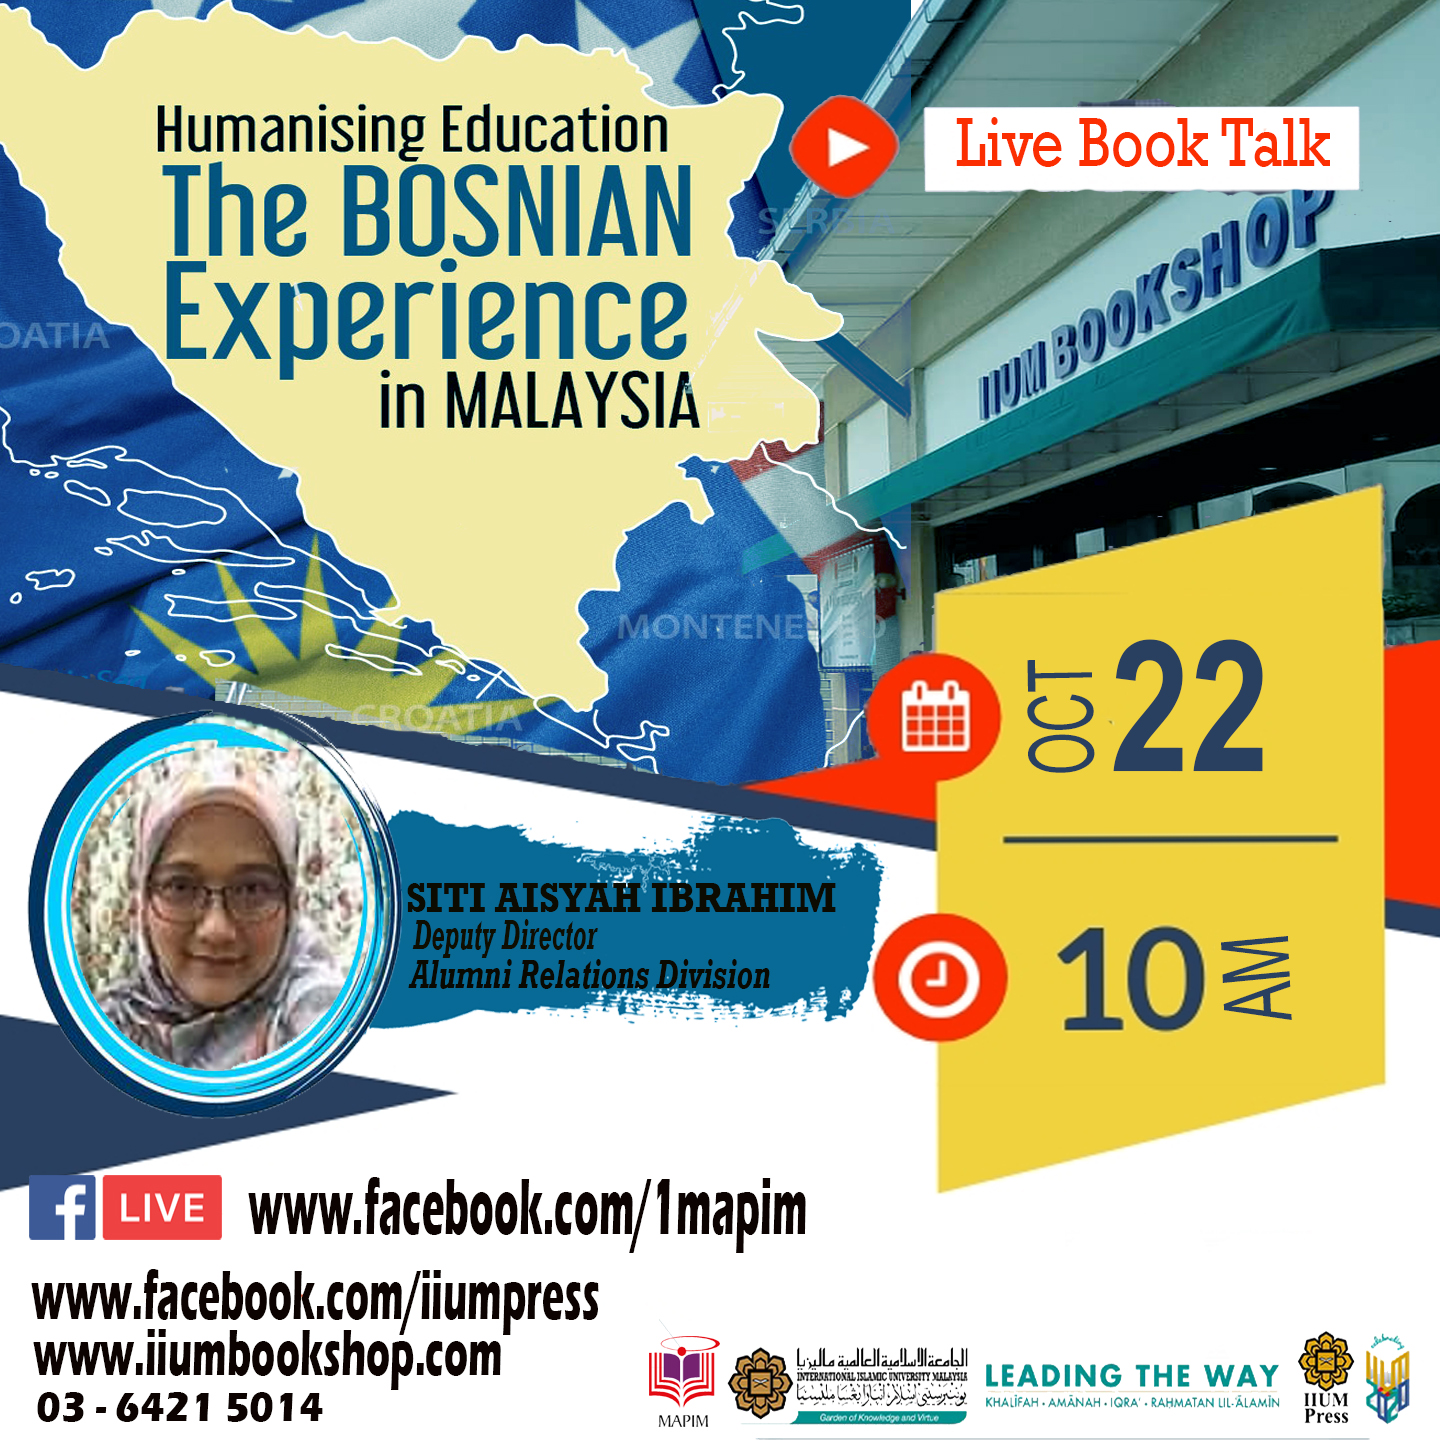 BOOK TALK: HUMANISING EDUCATION, THE BOSNIAN EXPERIENCE IN MALAYSIA